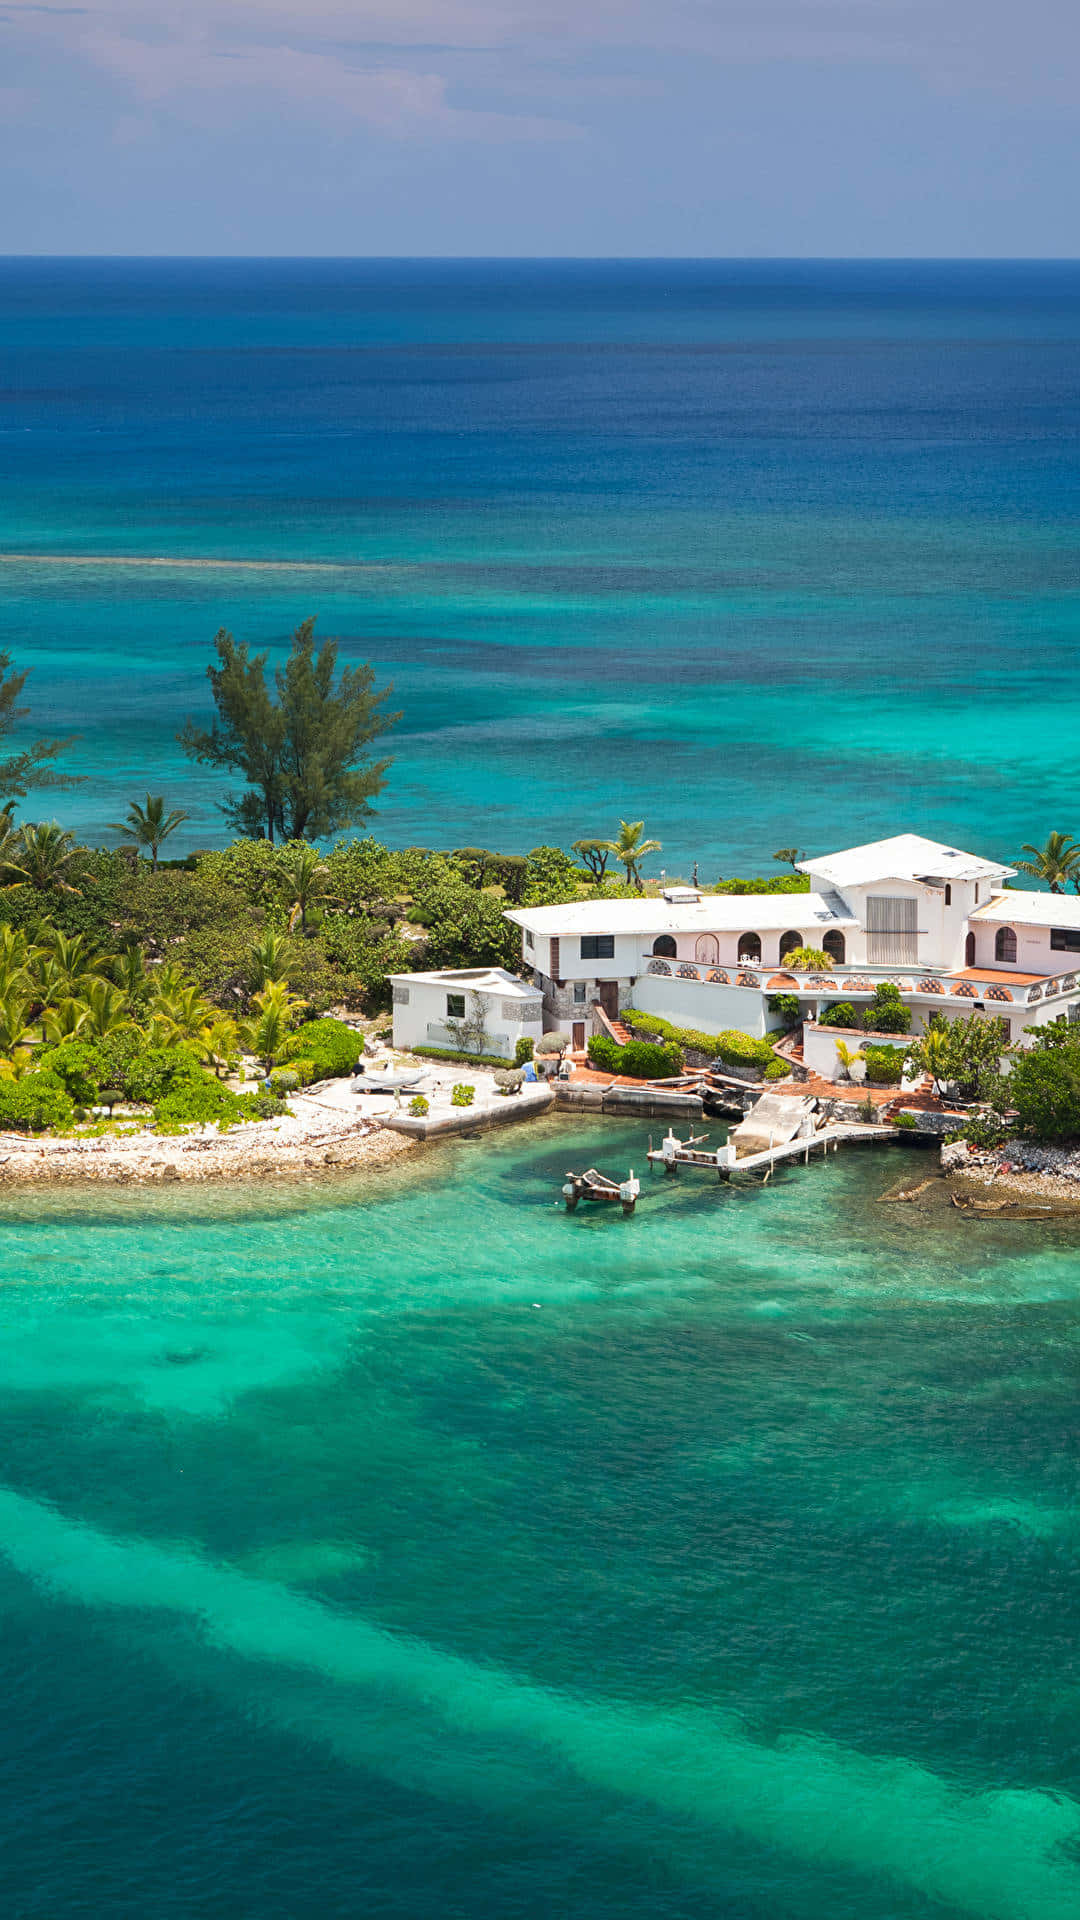 Island Beach Resort In The Caribbean Sea Picture